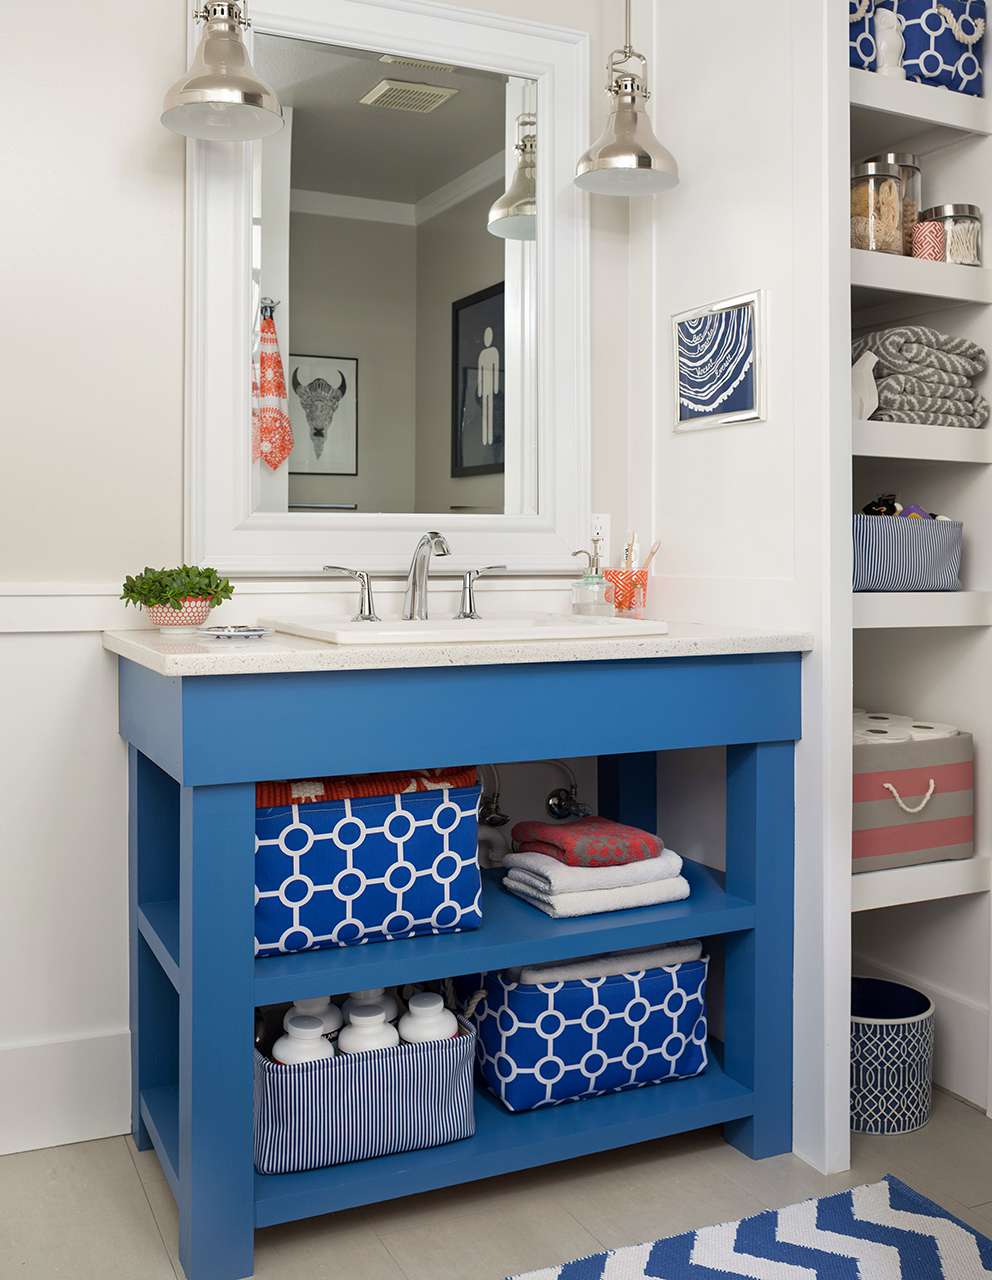 18 Diy Bathroom Vanity Ideas For Custom, Bathroom Cabinet And Sink Ideas